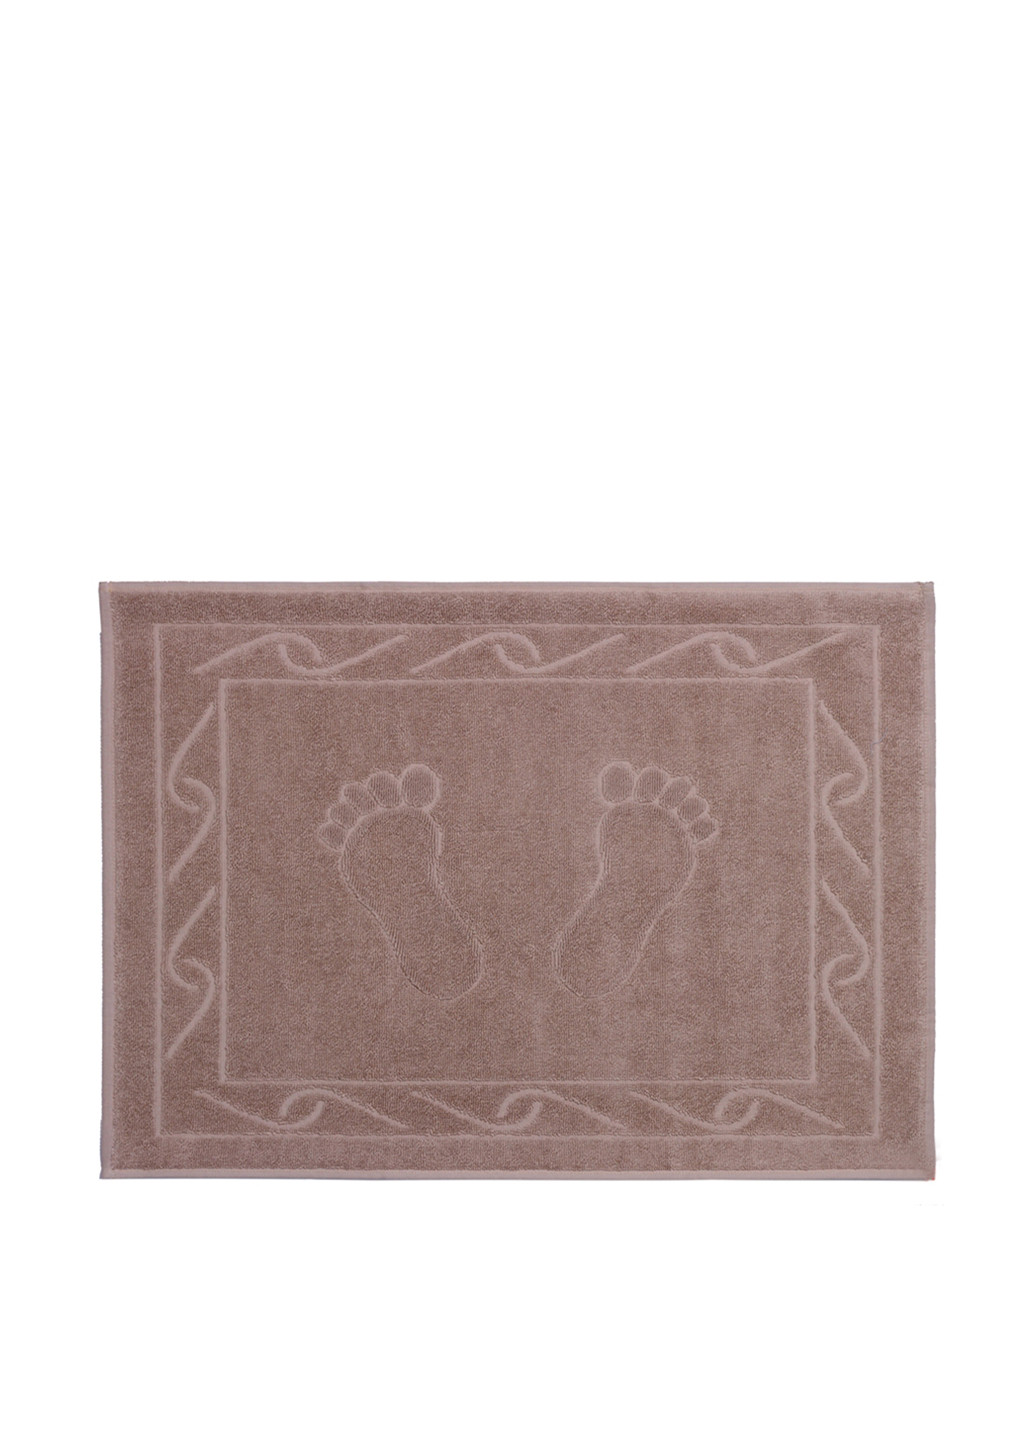 Hobby полотенце, 50х70 см фактура светло-коричневый производство - Турция